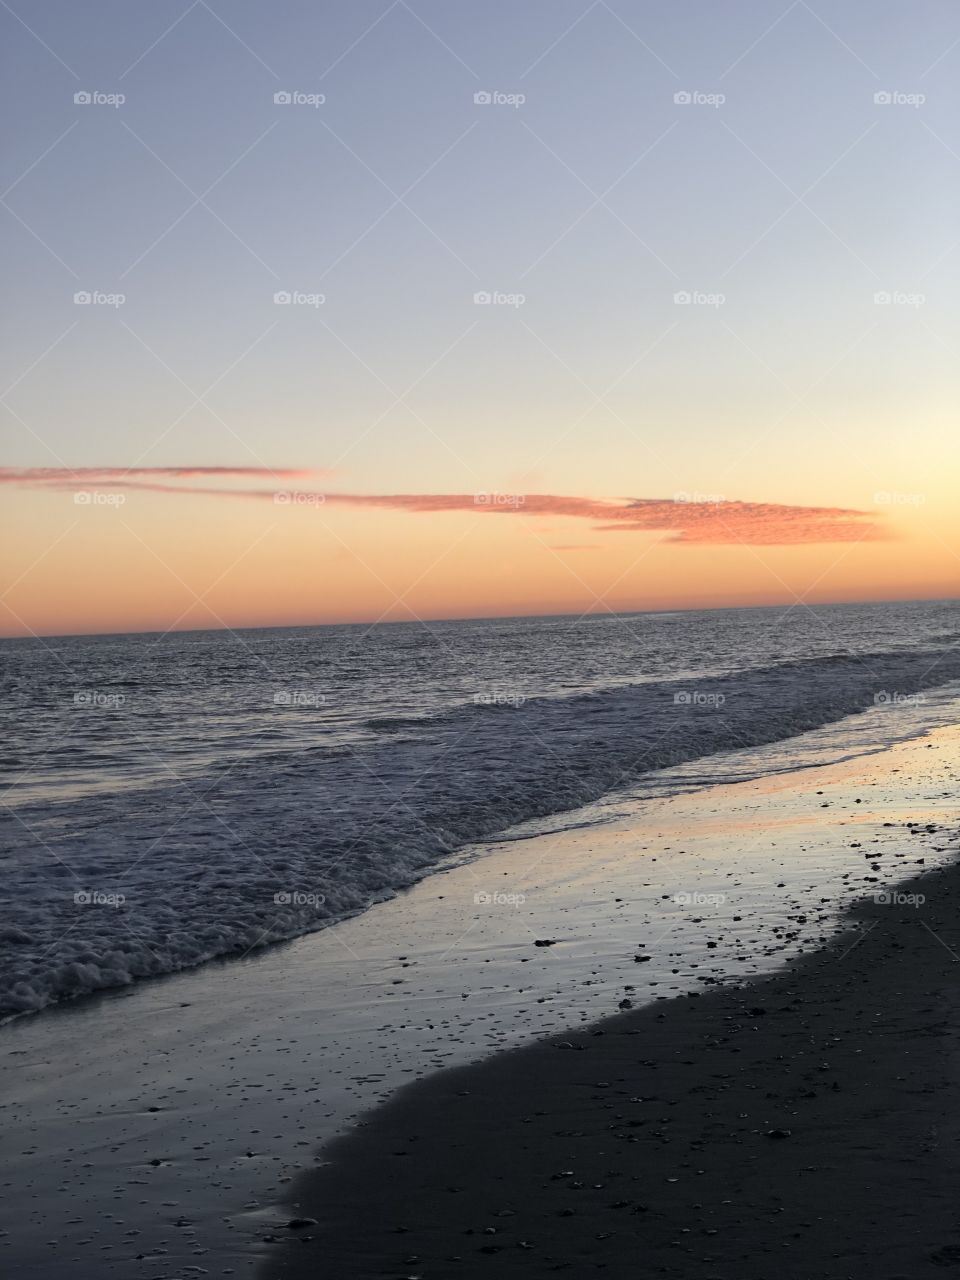 Myrtle Beach sunset 